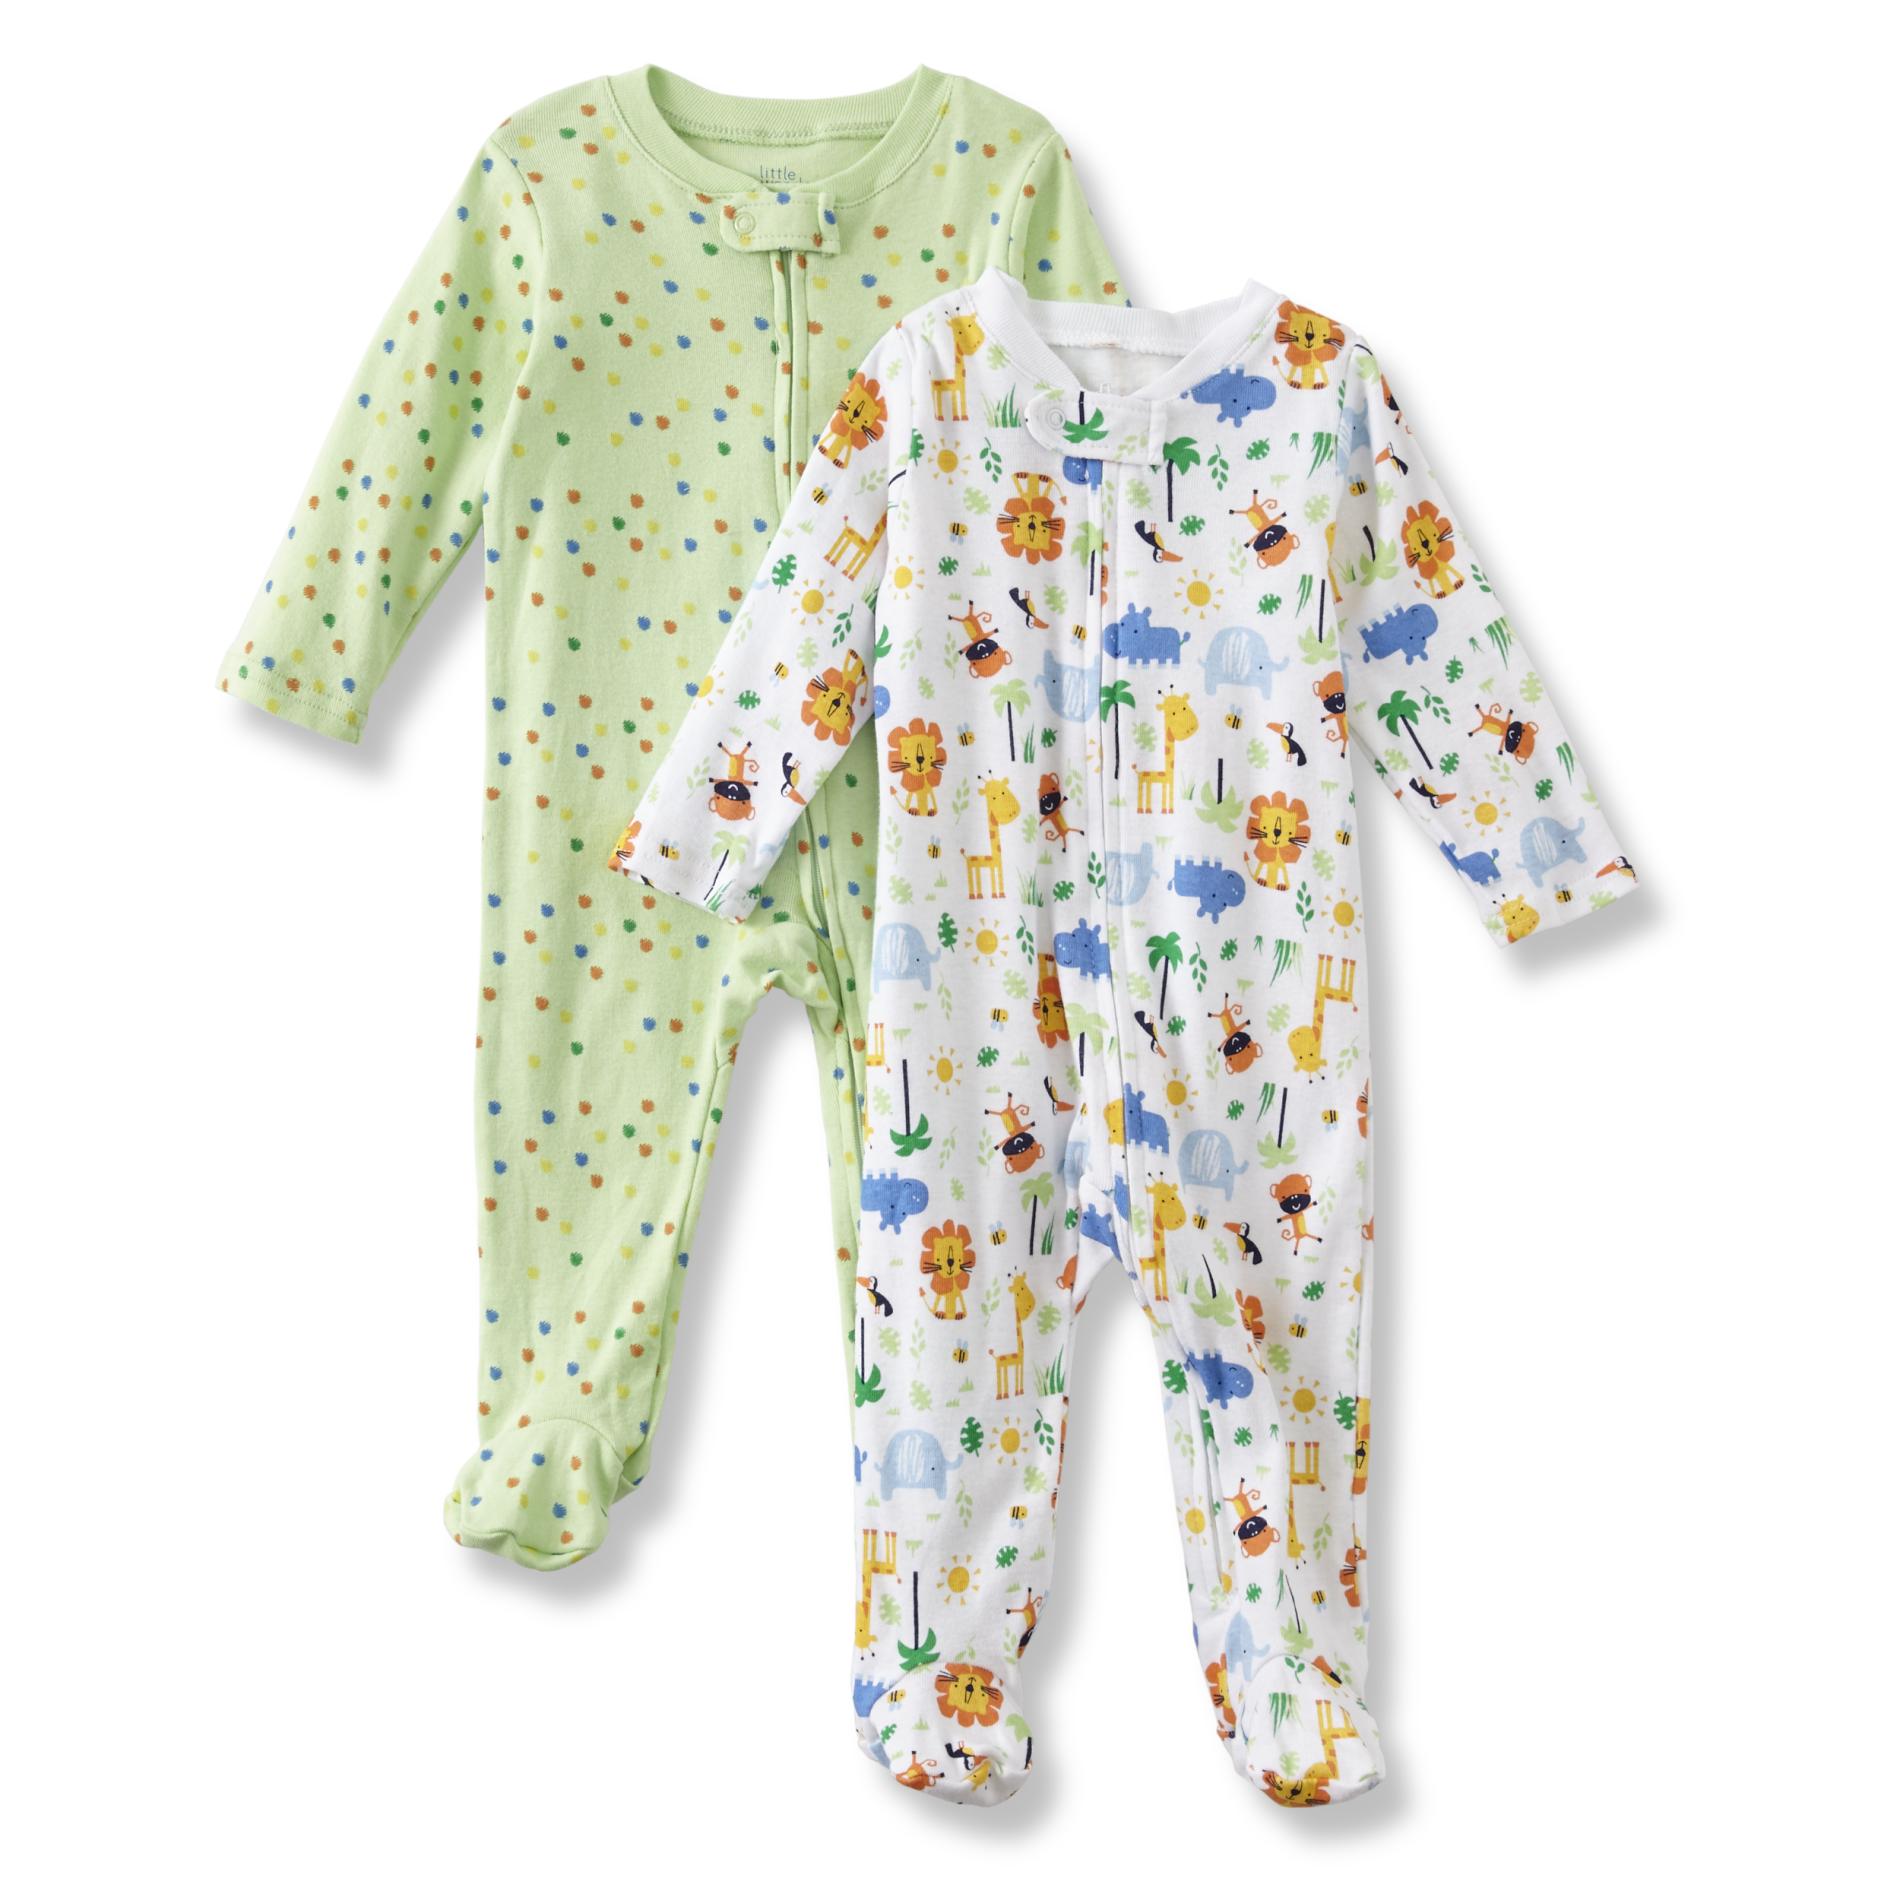 Little Wonders Infant Boys' 2-Pack Sleeper Pajamas - Dots & Safari